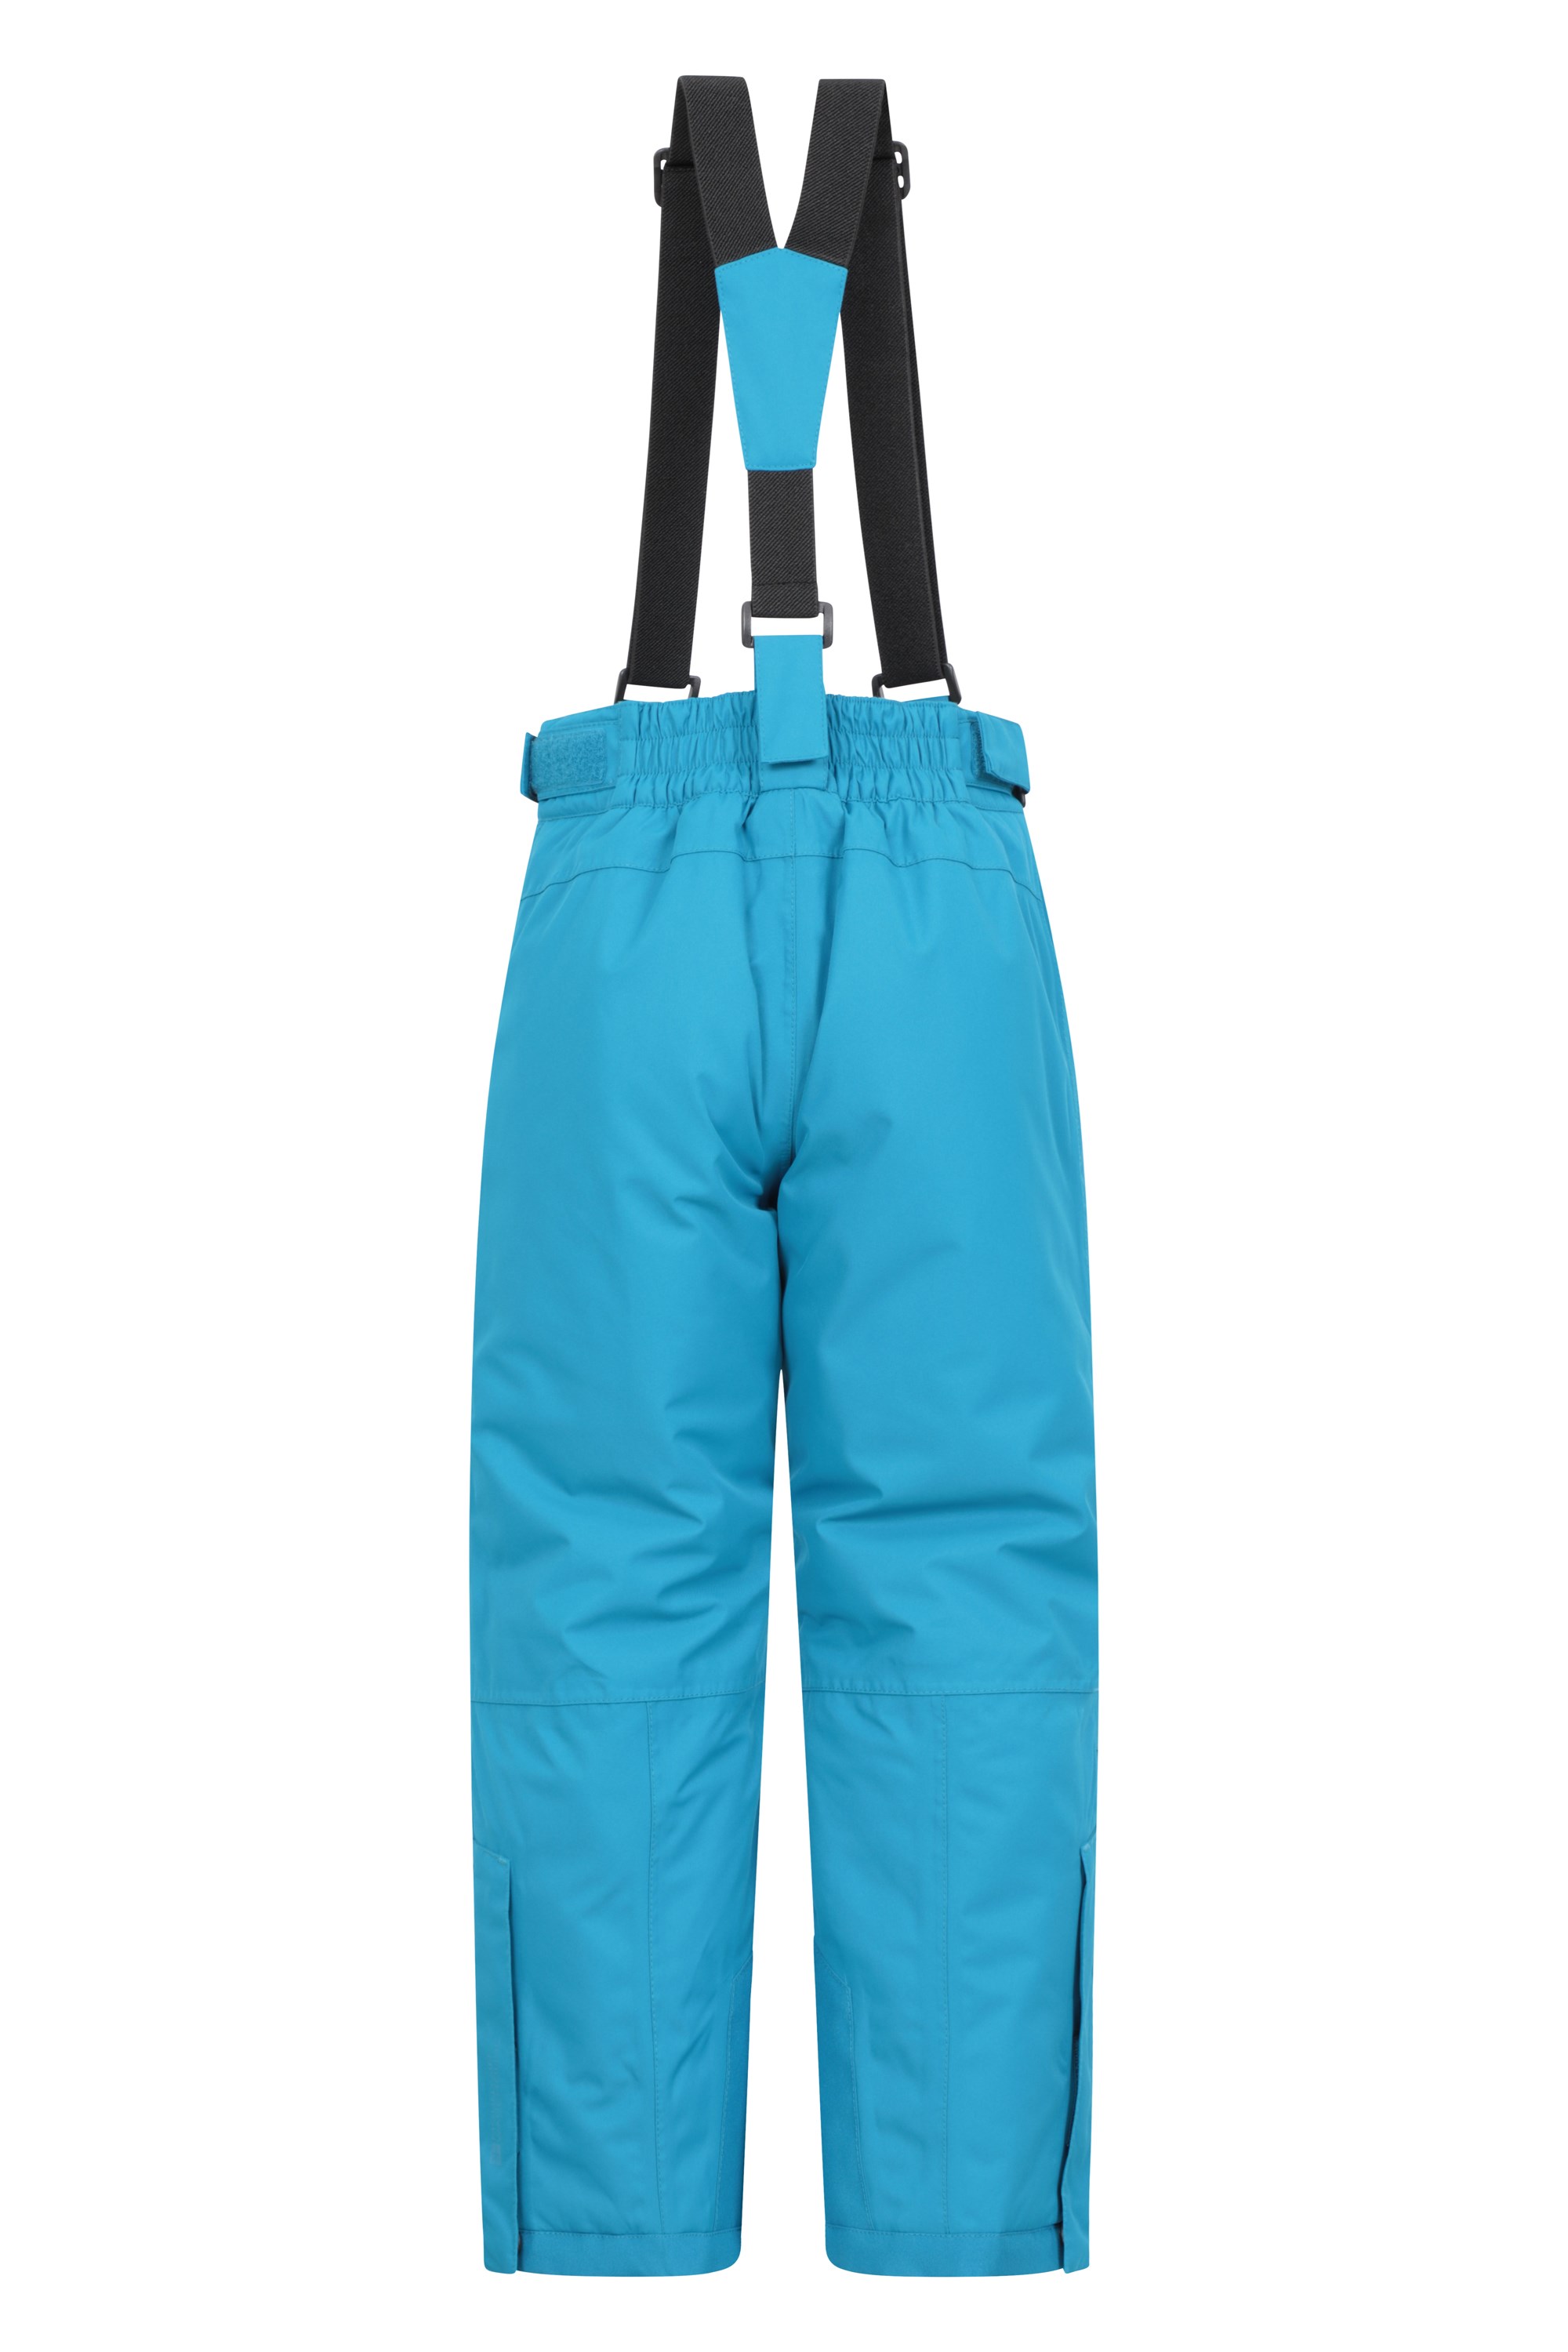 NEW Mountain Warehouse Kids Ski Trousers Salopettes Girls Turquoise Teal Age 3-4 